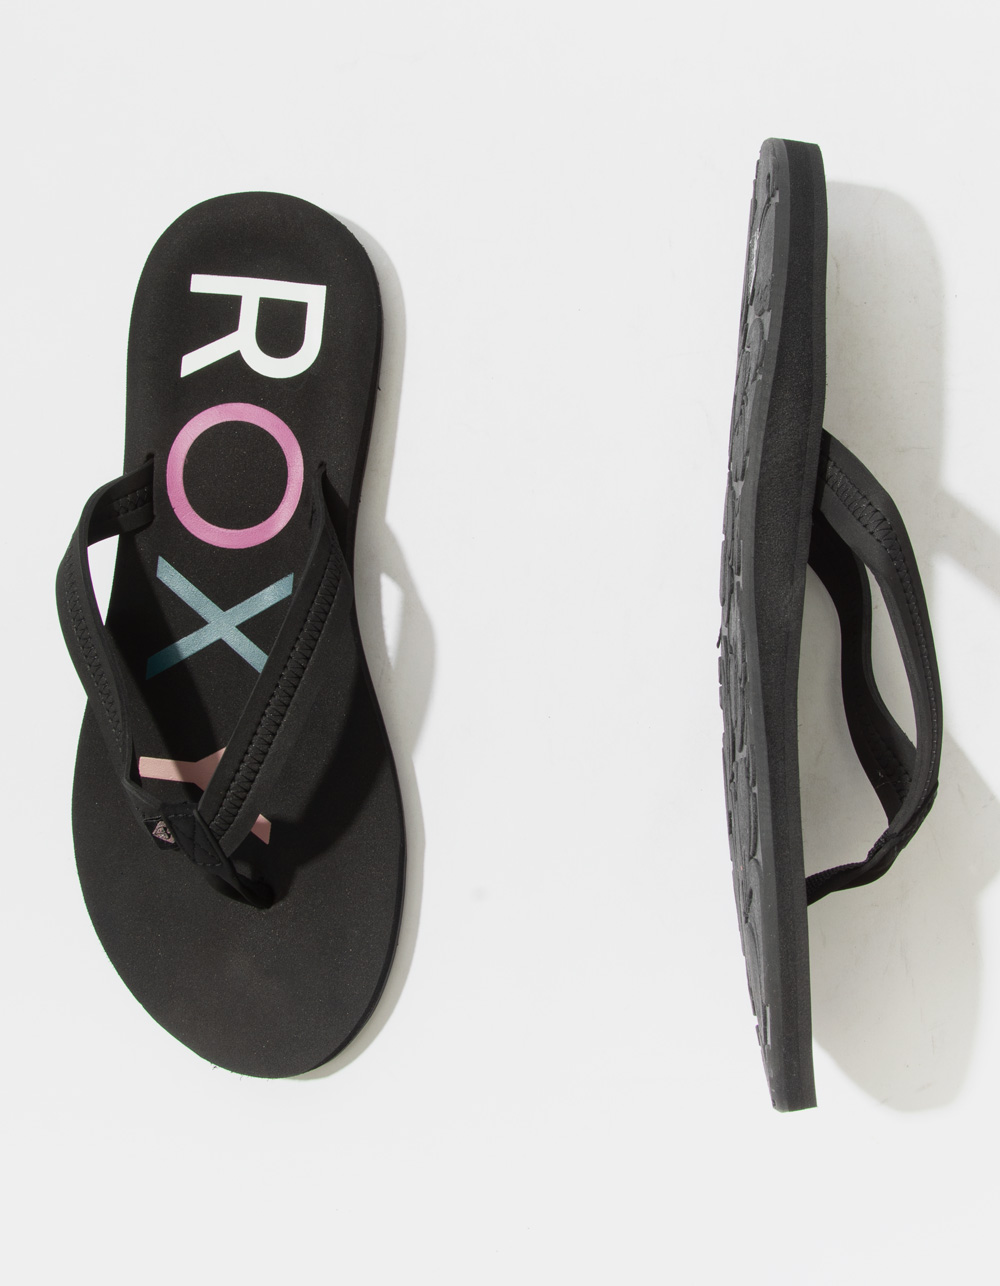 Roxy Vista III Black Sandals